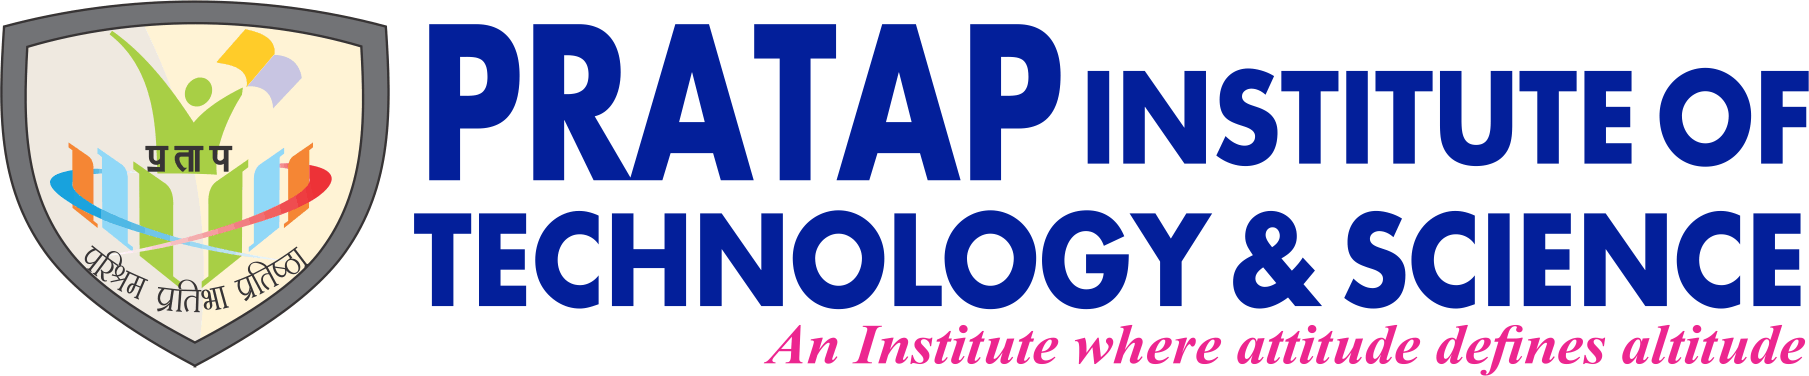 PRATAP Institute of Technology & Science